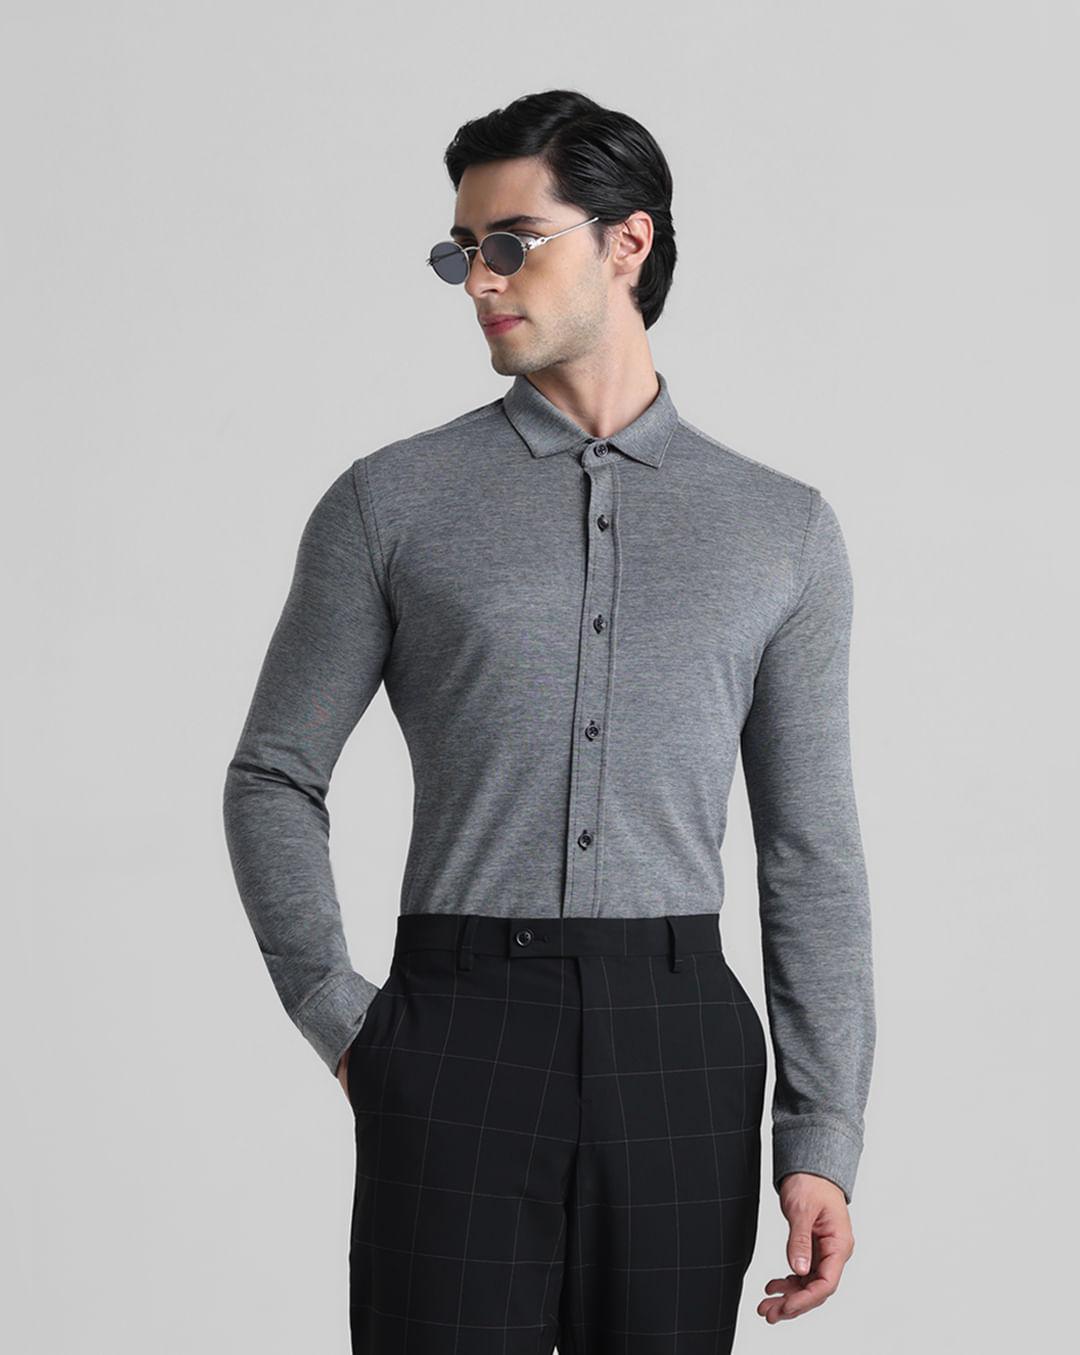 grey-knitted-full-sleeves-shirt